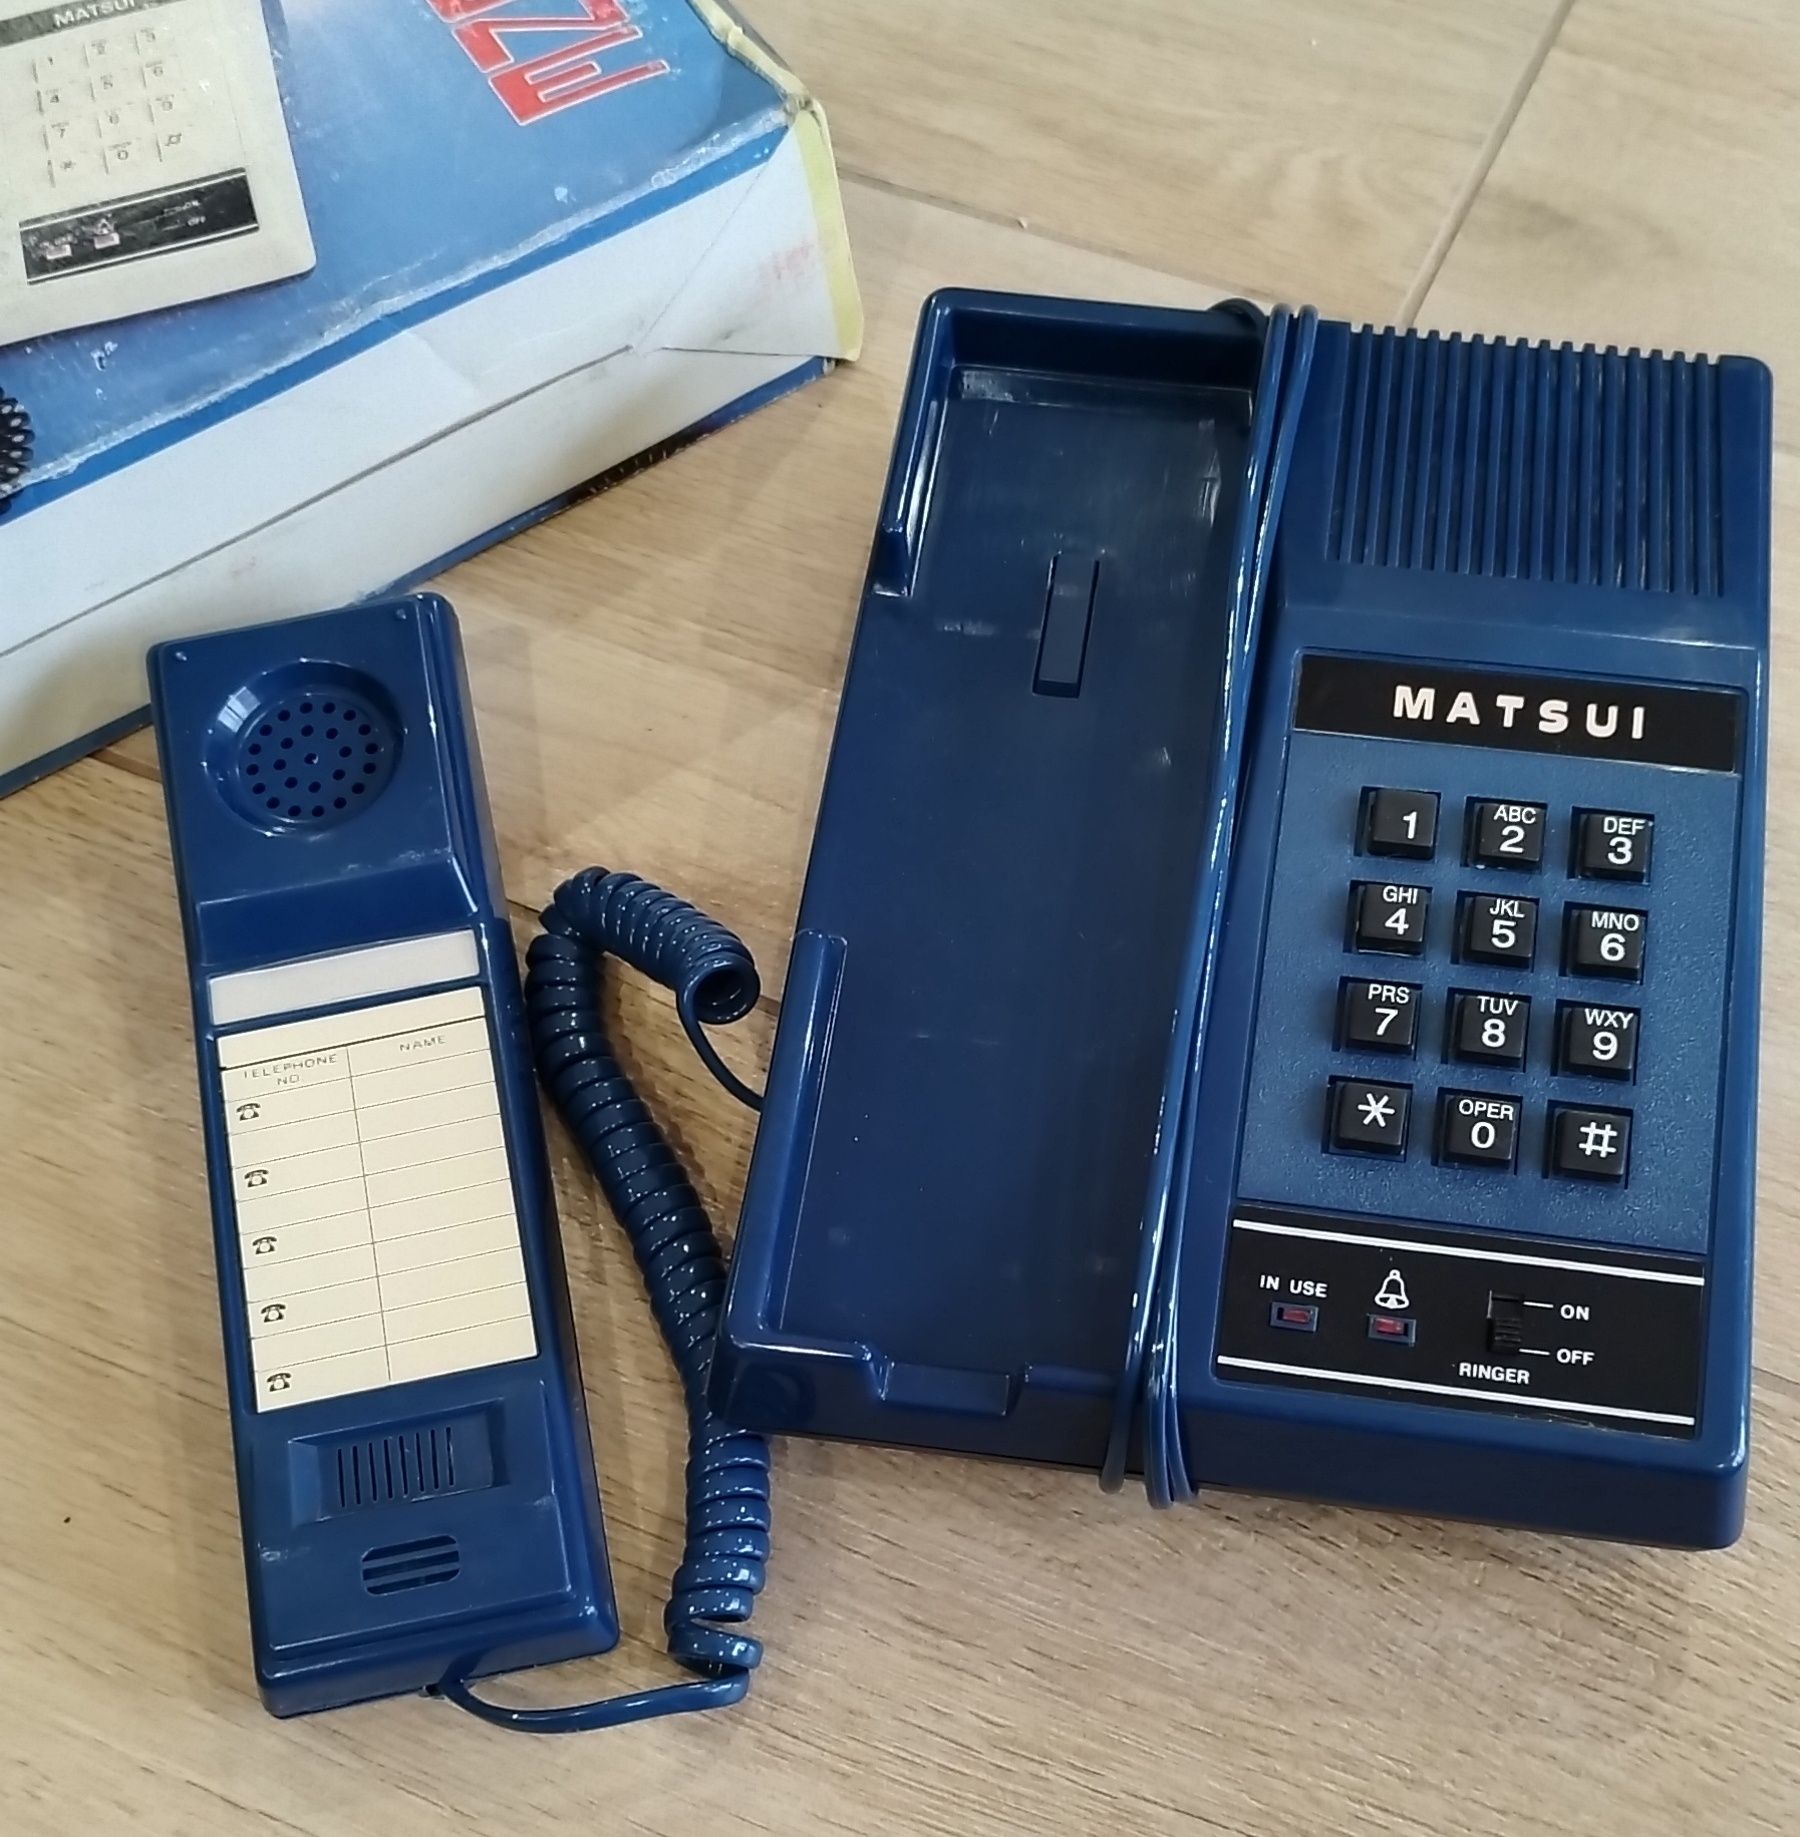 Telefon z lat 90 Matsui - zabytek